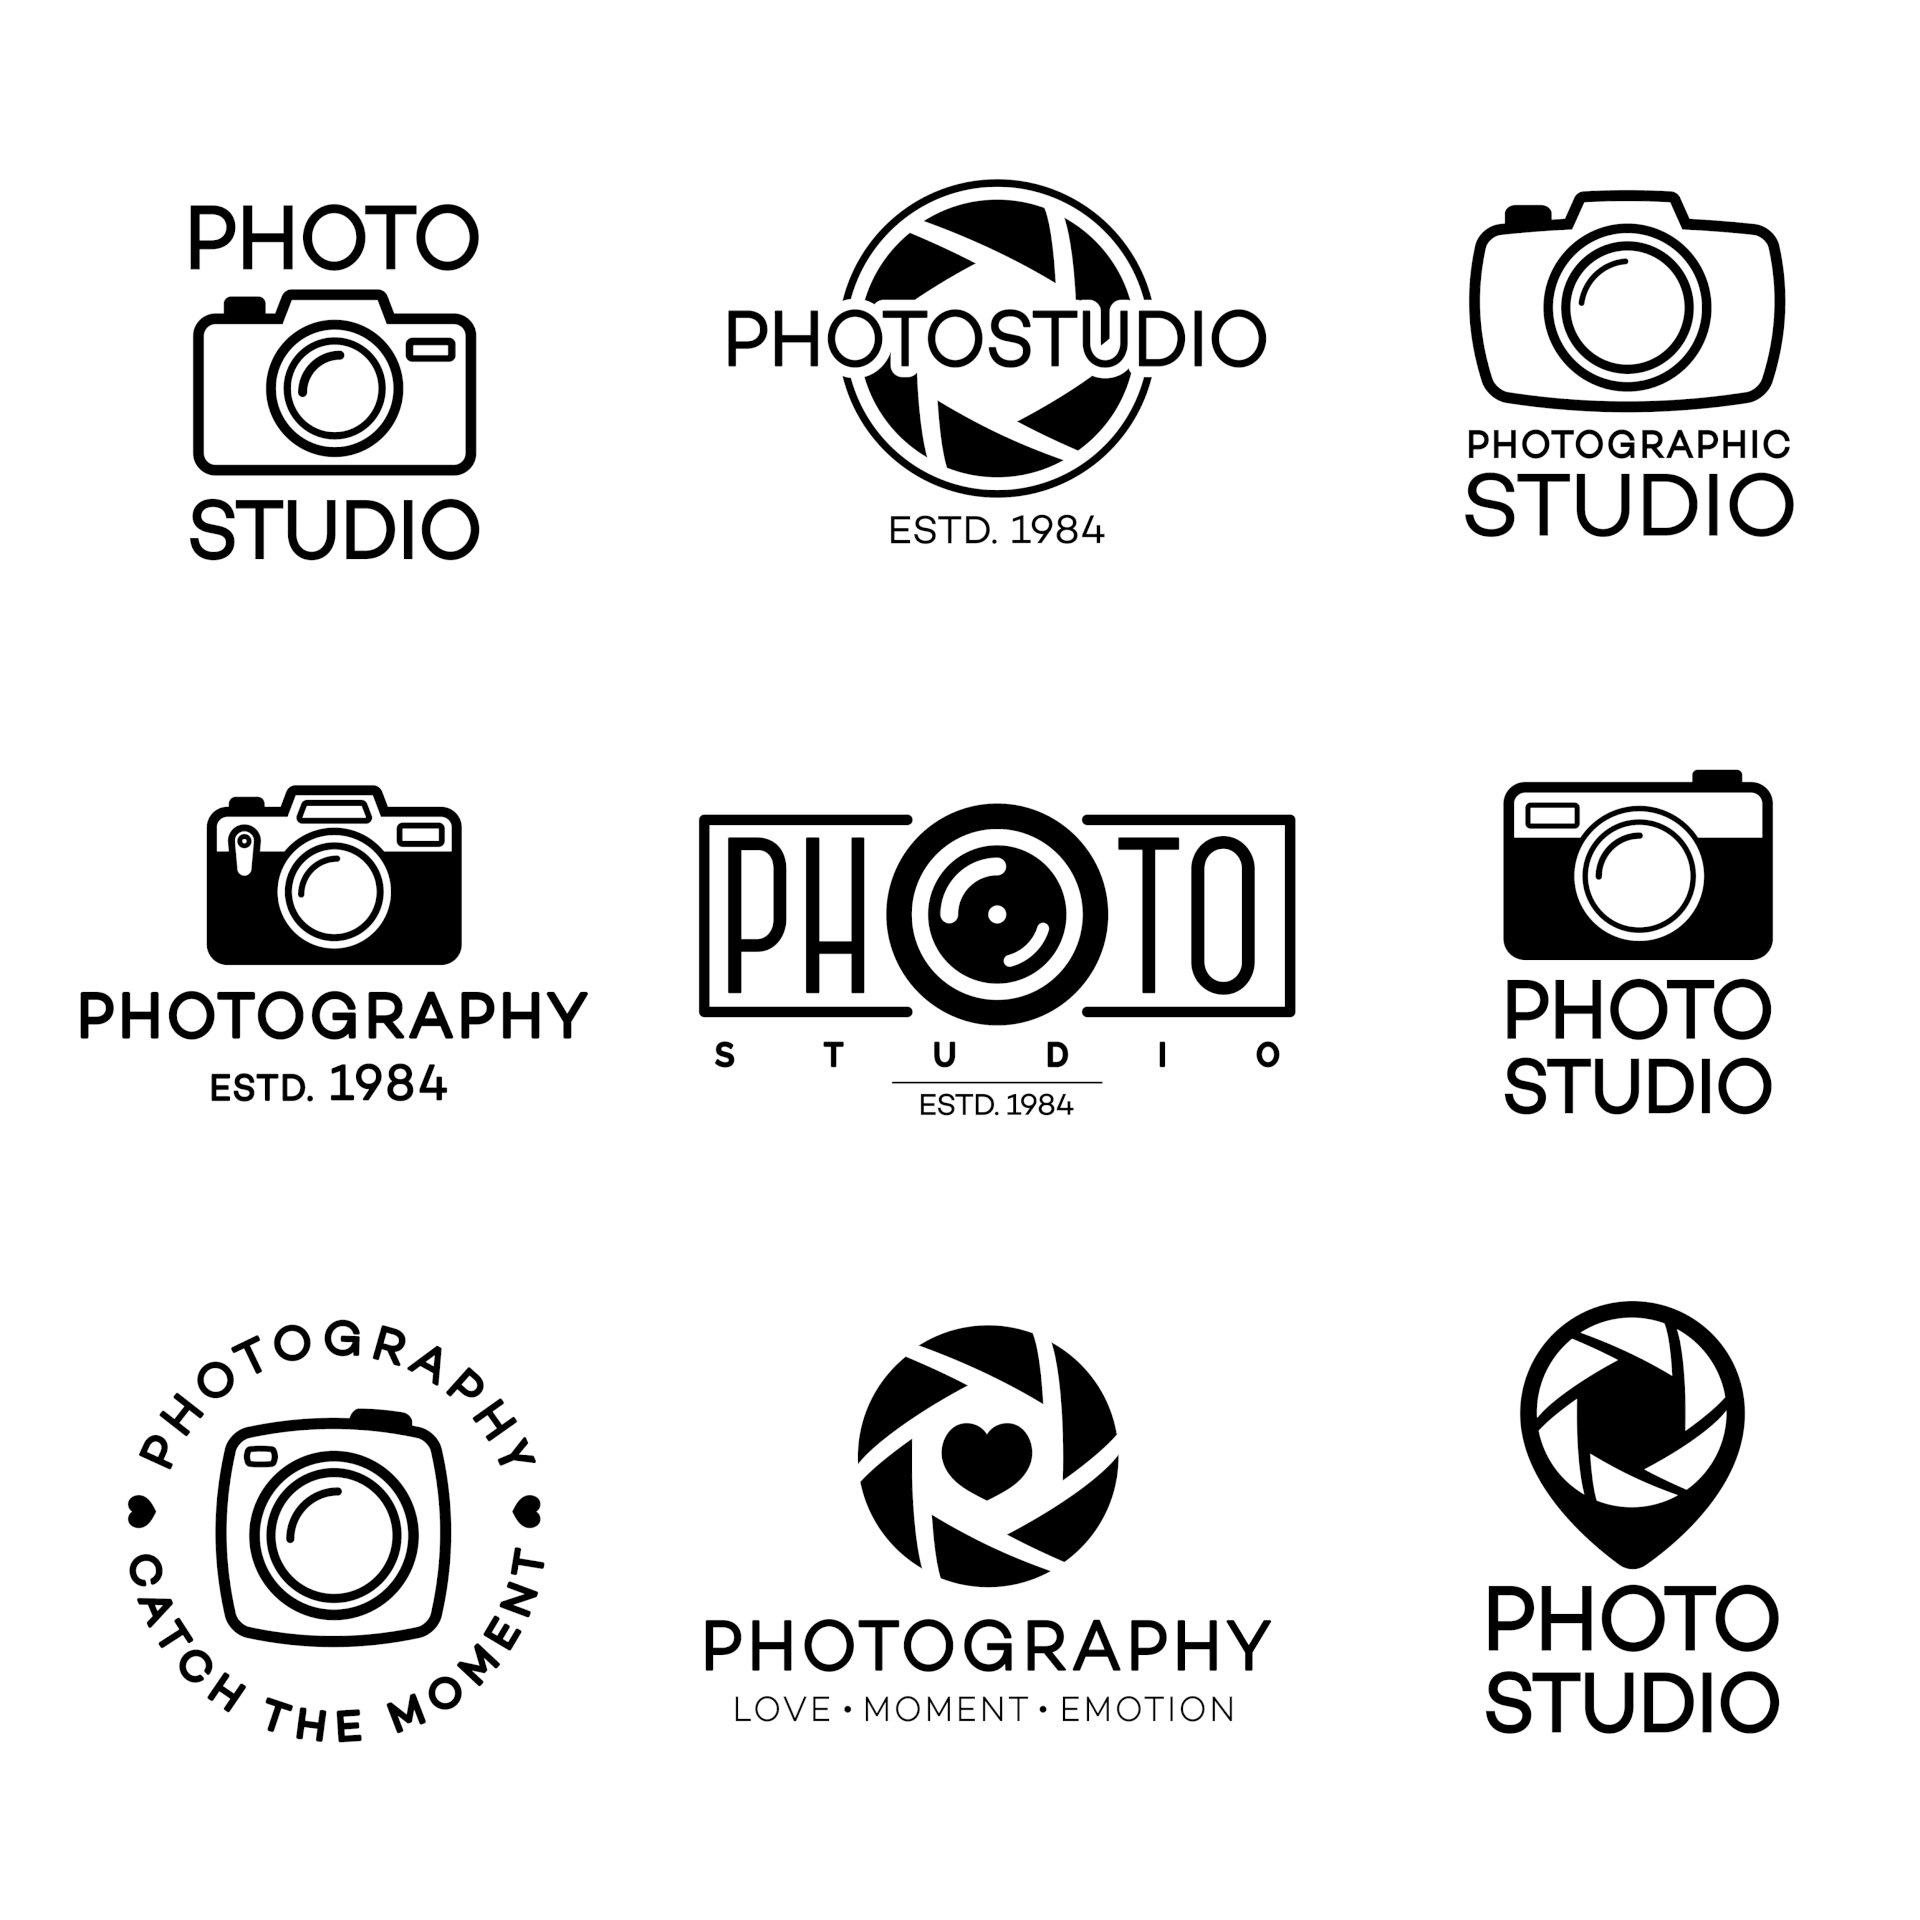 Tải 100+ mẫu logo camera đẹp tối giản file vector AI, EPS, JPEG, SVG